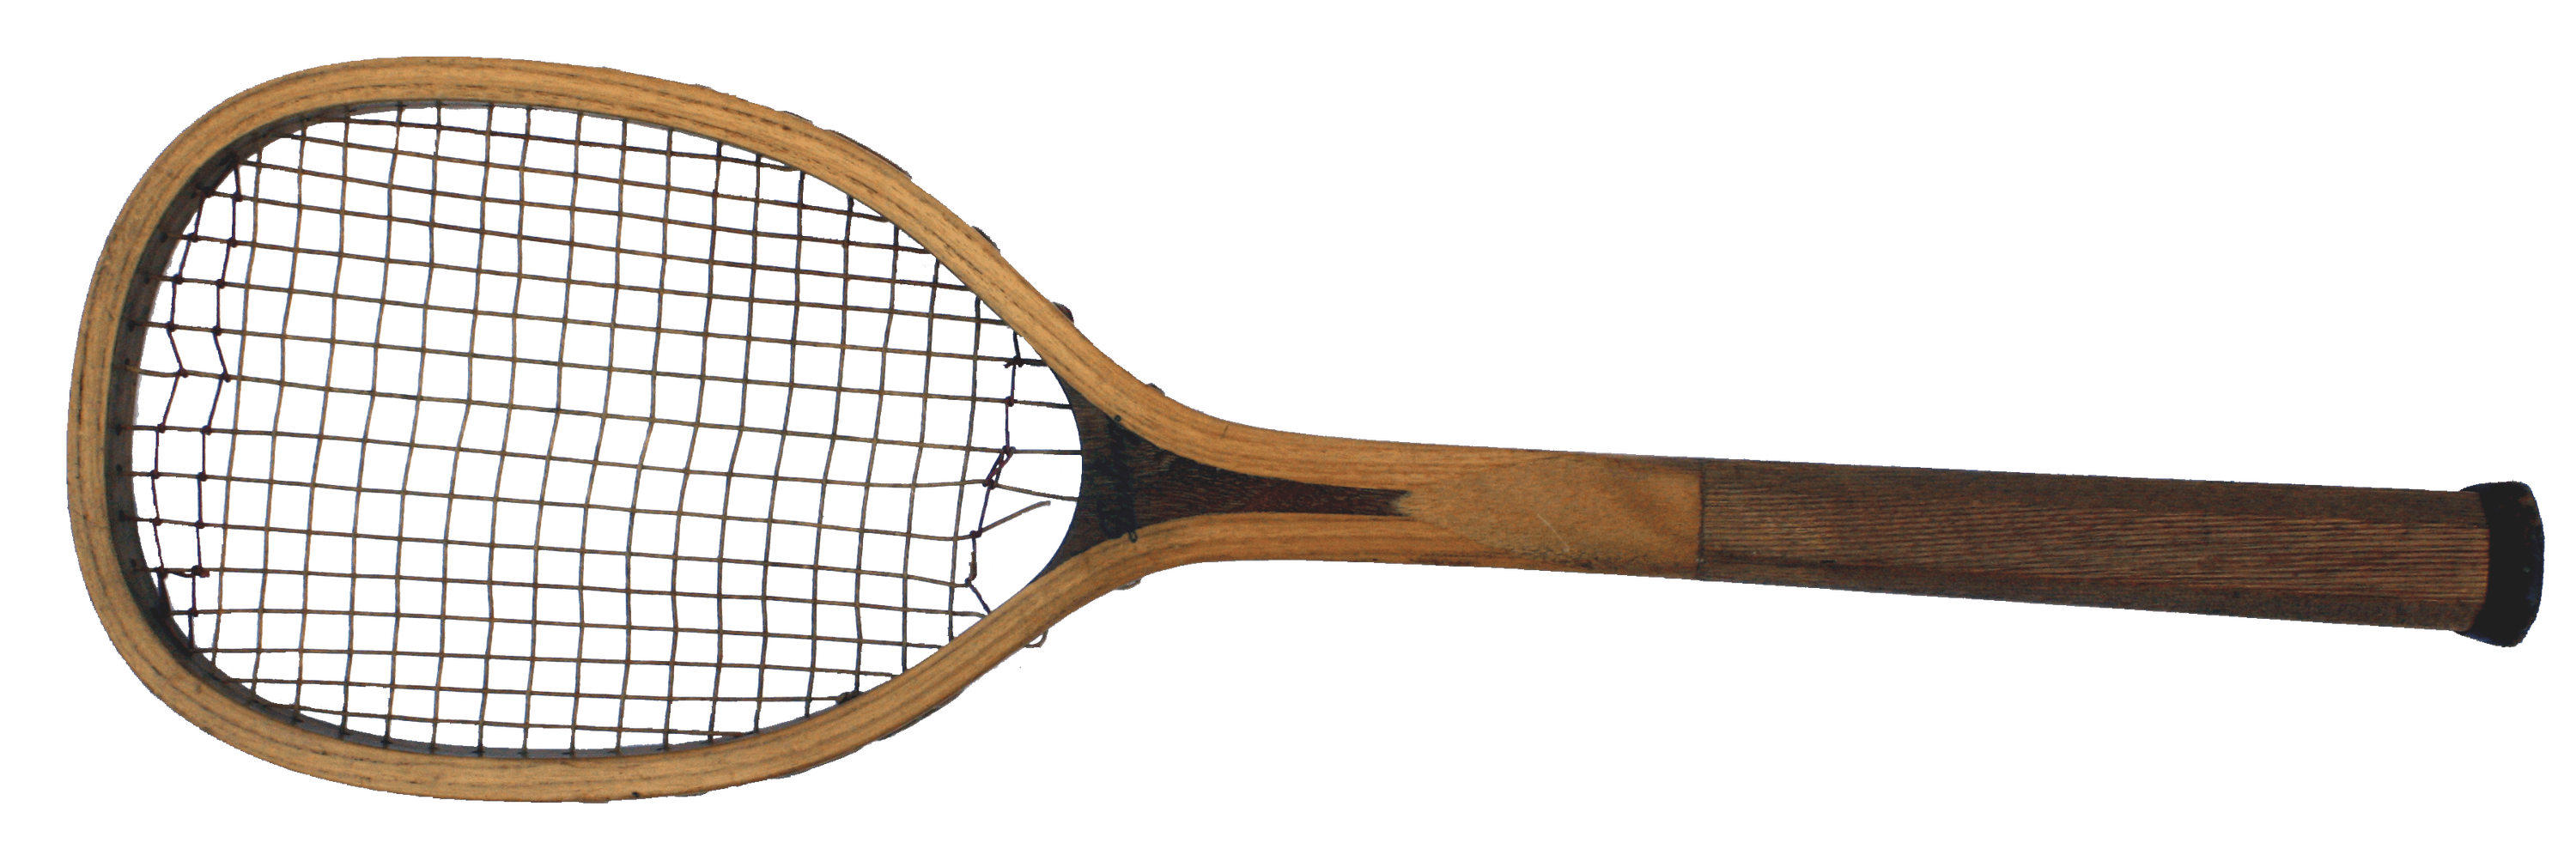 Antique Tennis Racket Clip arts